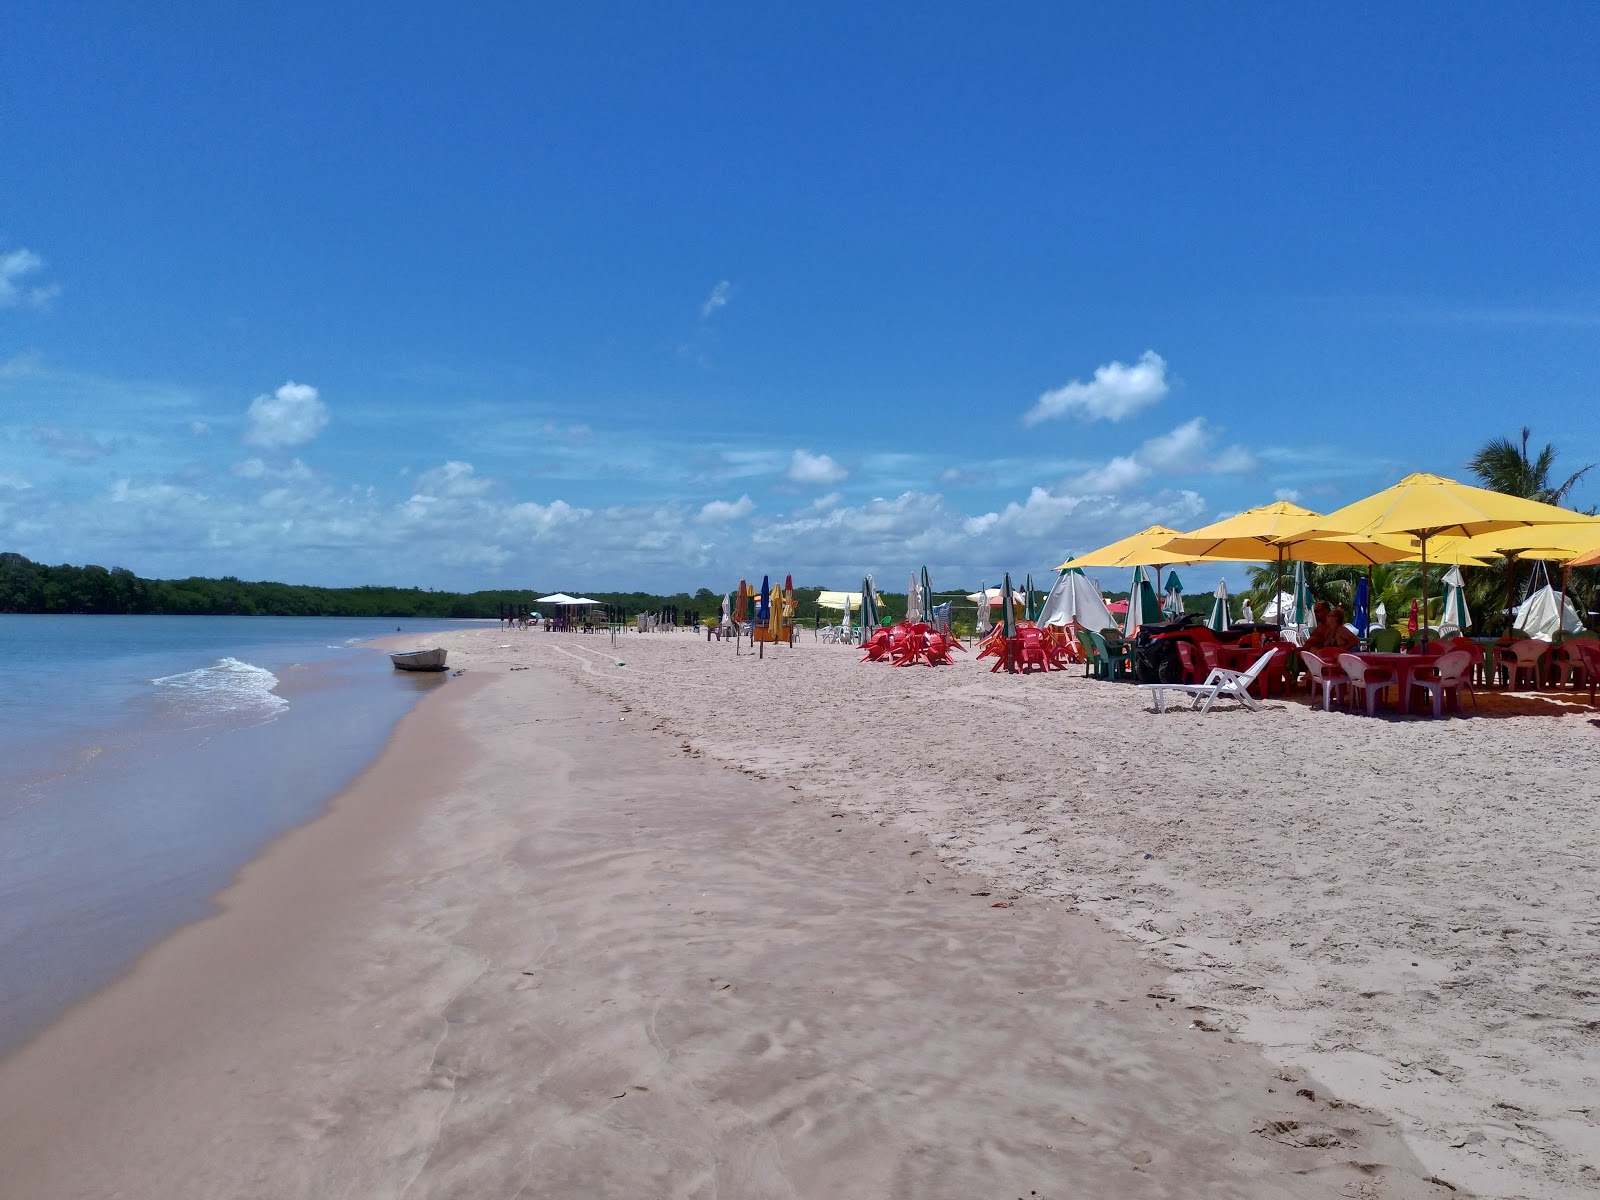 Foto de Praia da Barra con playa amplia